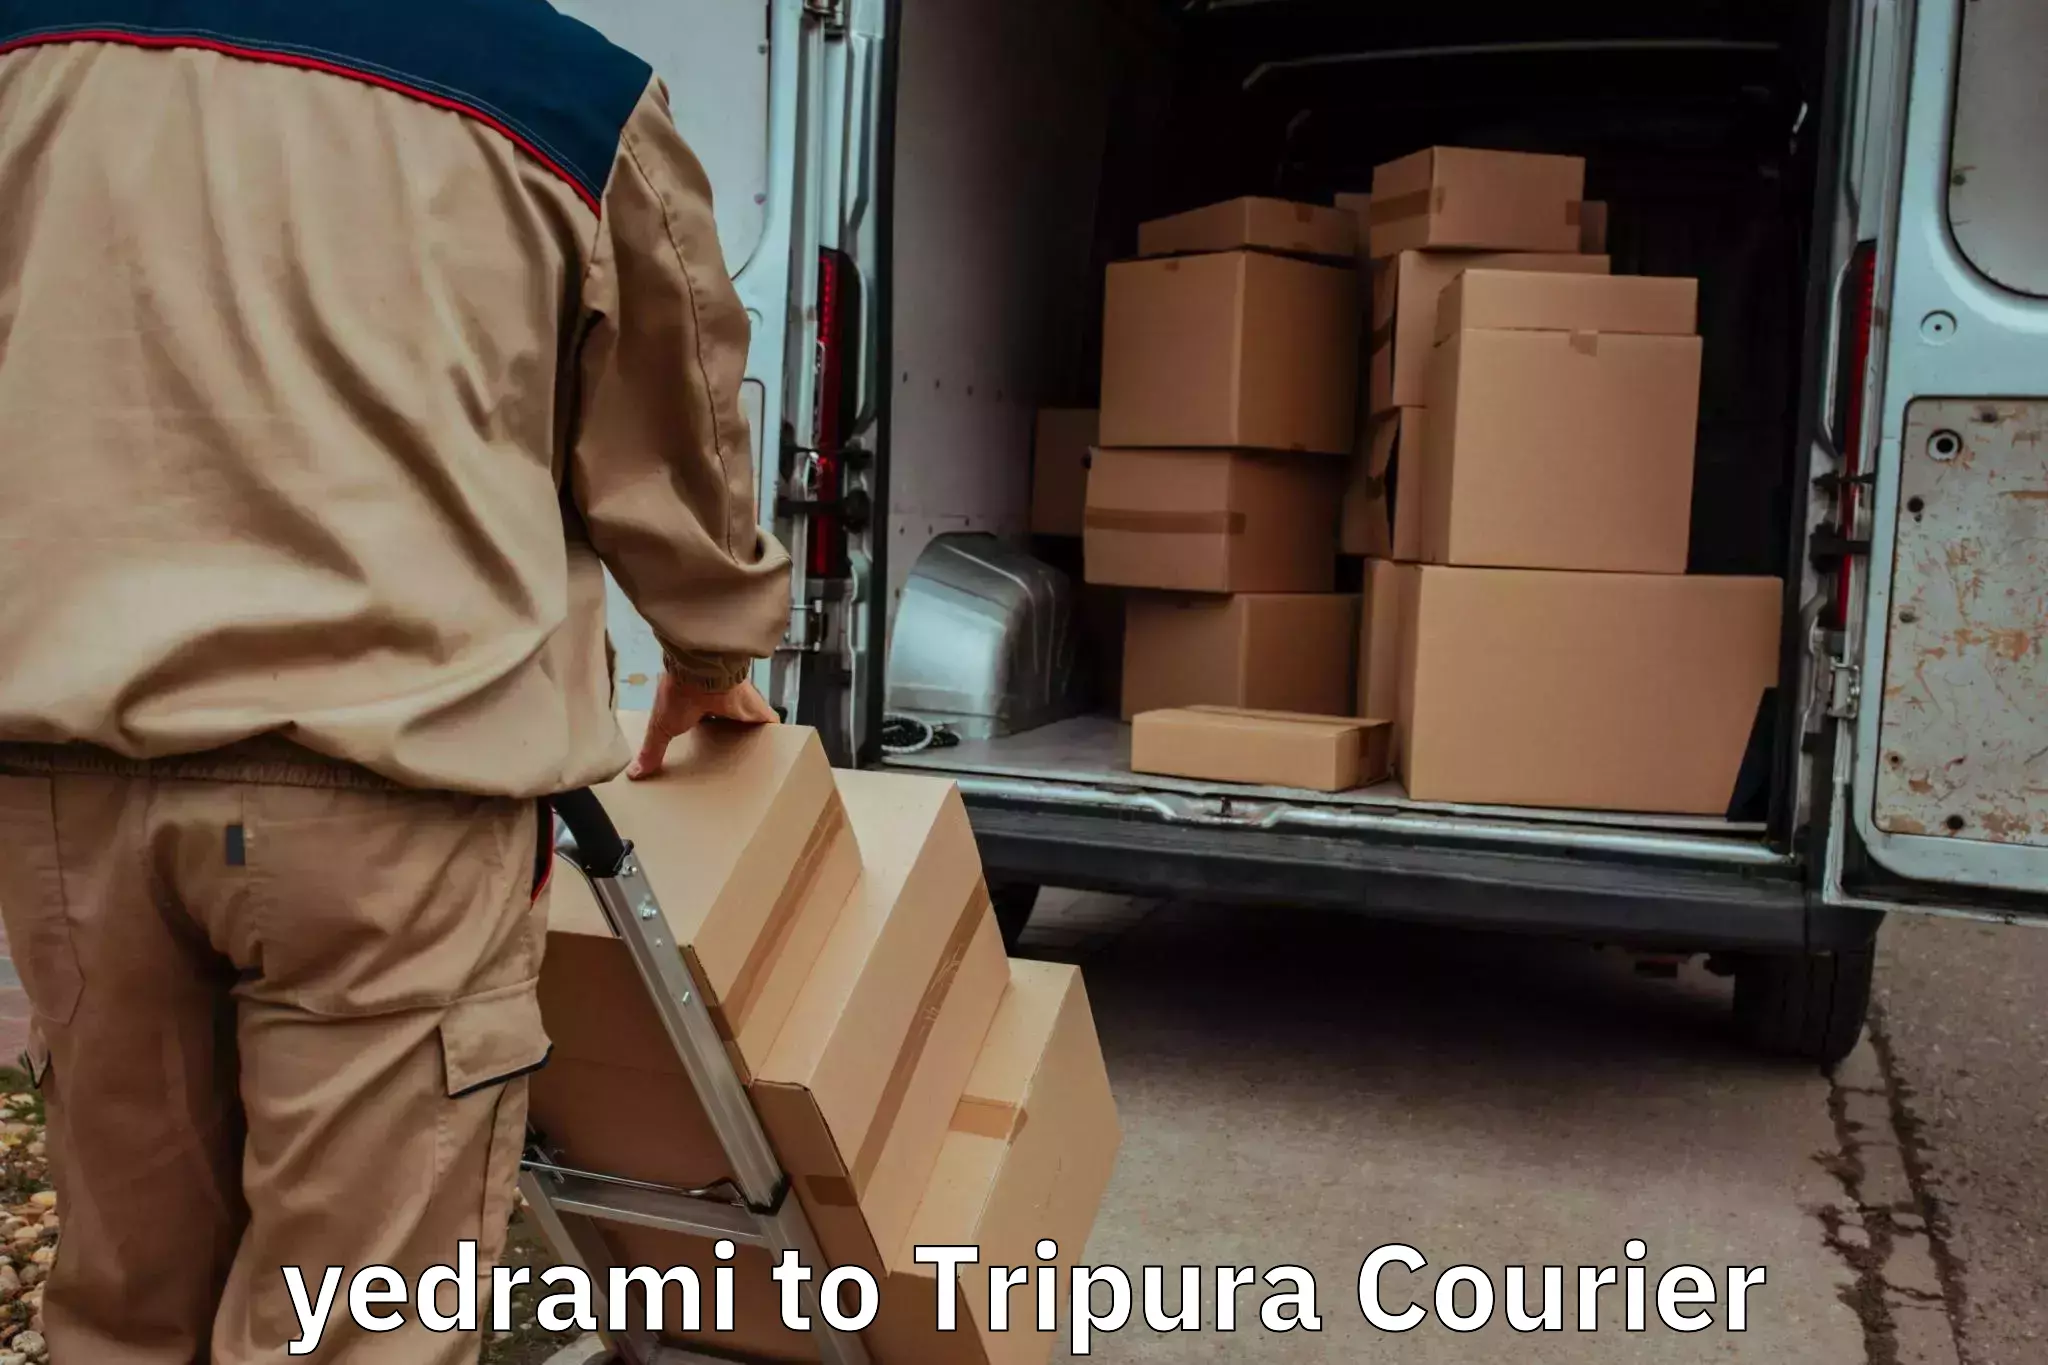 Full-service relocation yedrami to Tripura